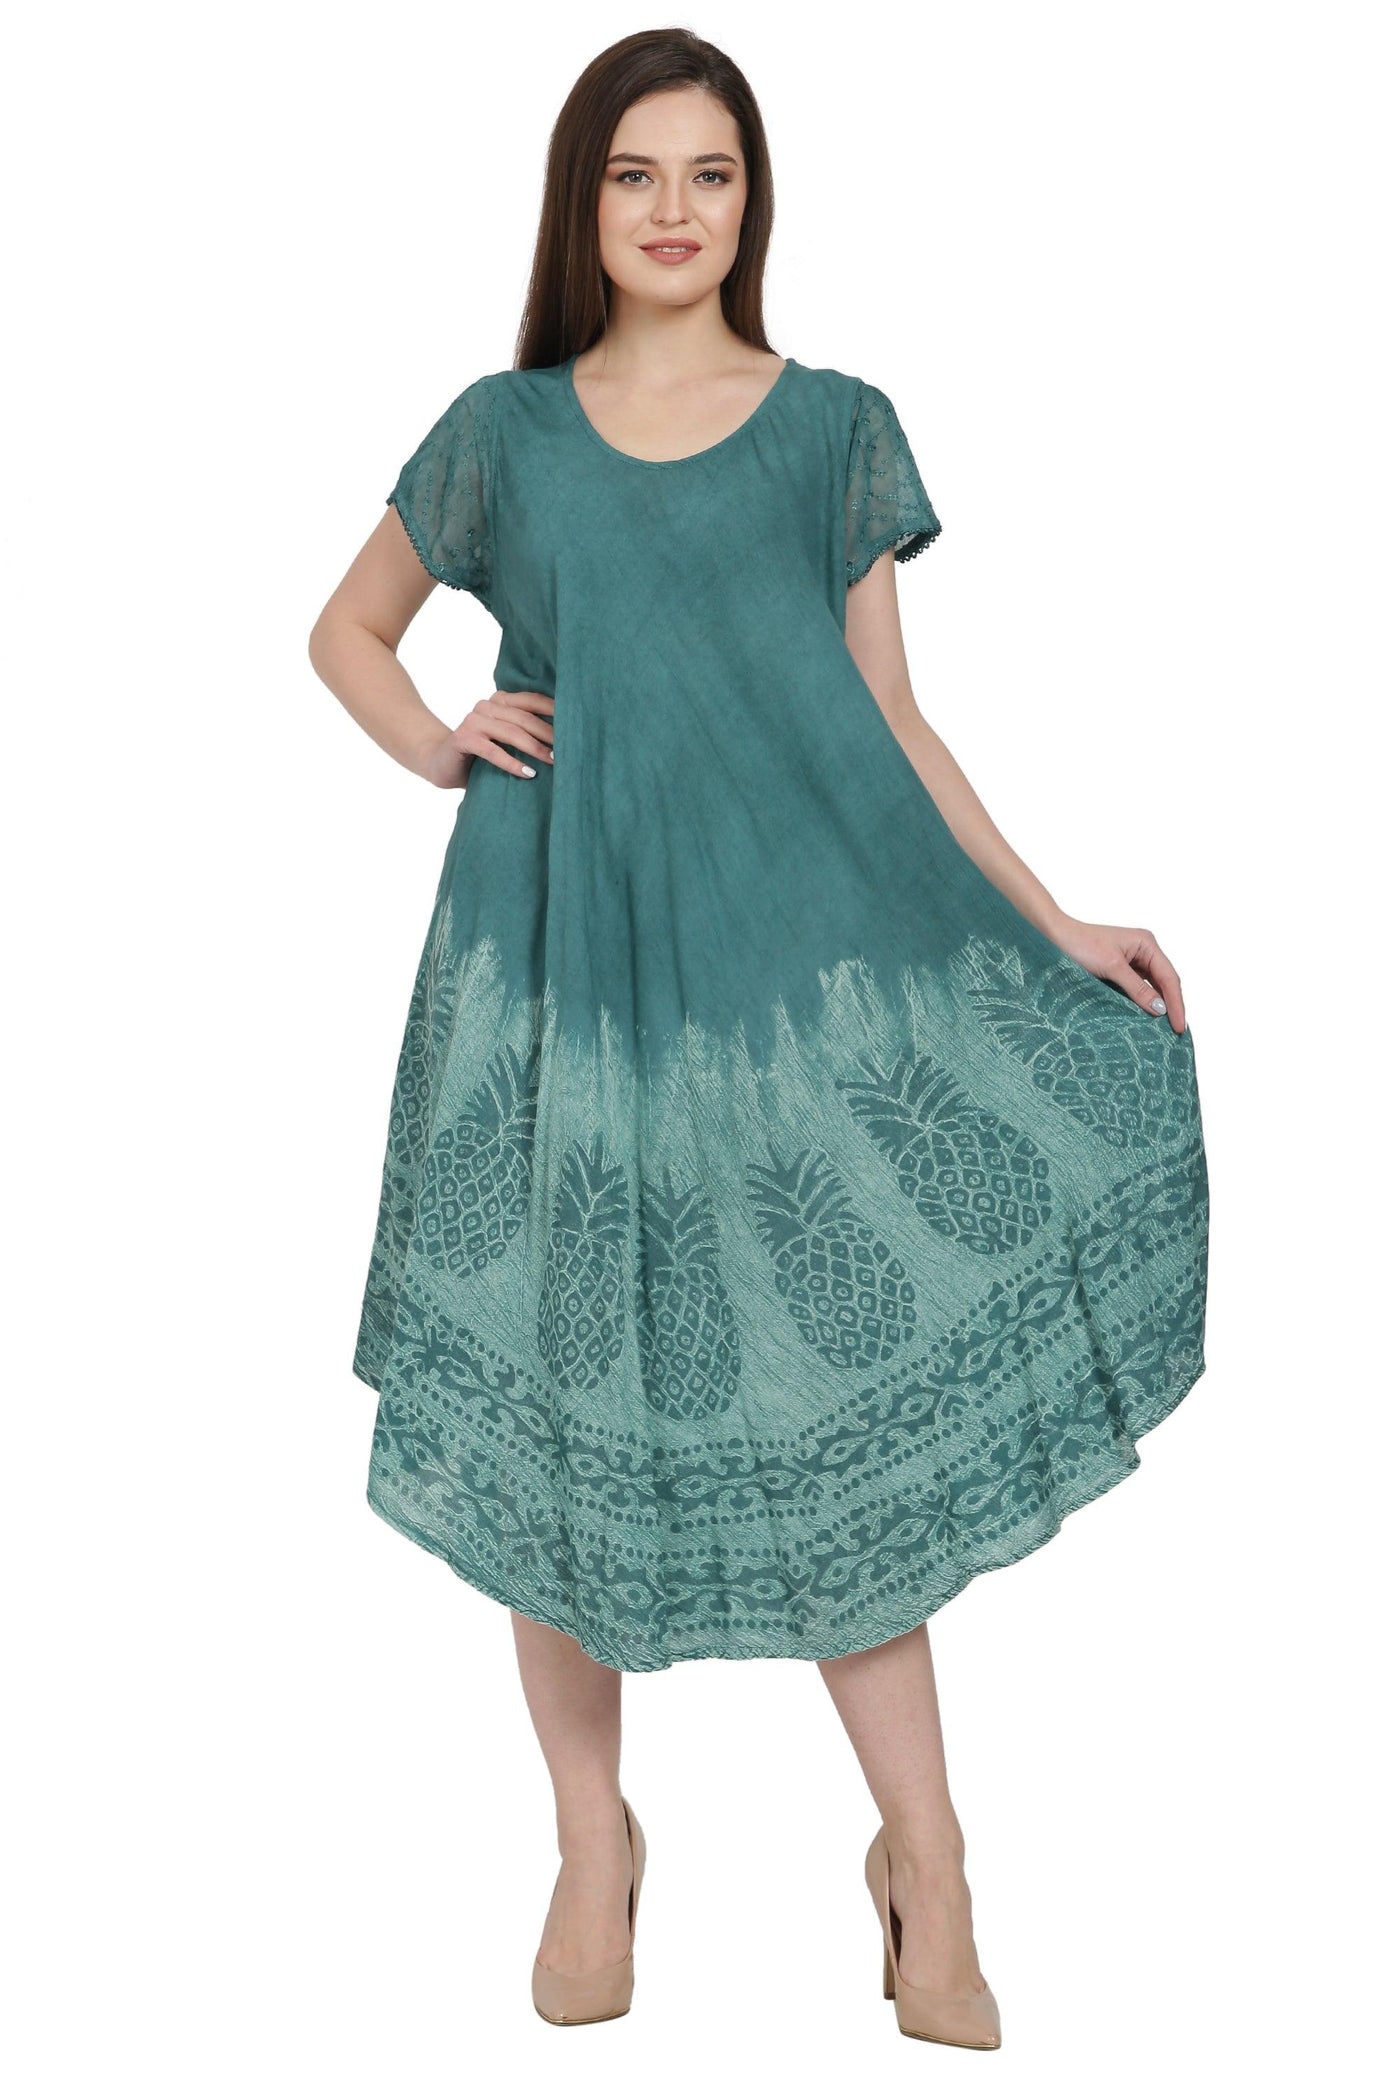 Pineapple Block Print Tie Dye A-Line Dress UDS52-2431  - Advance Apparels Inc